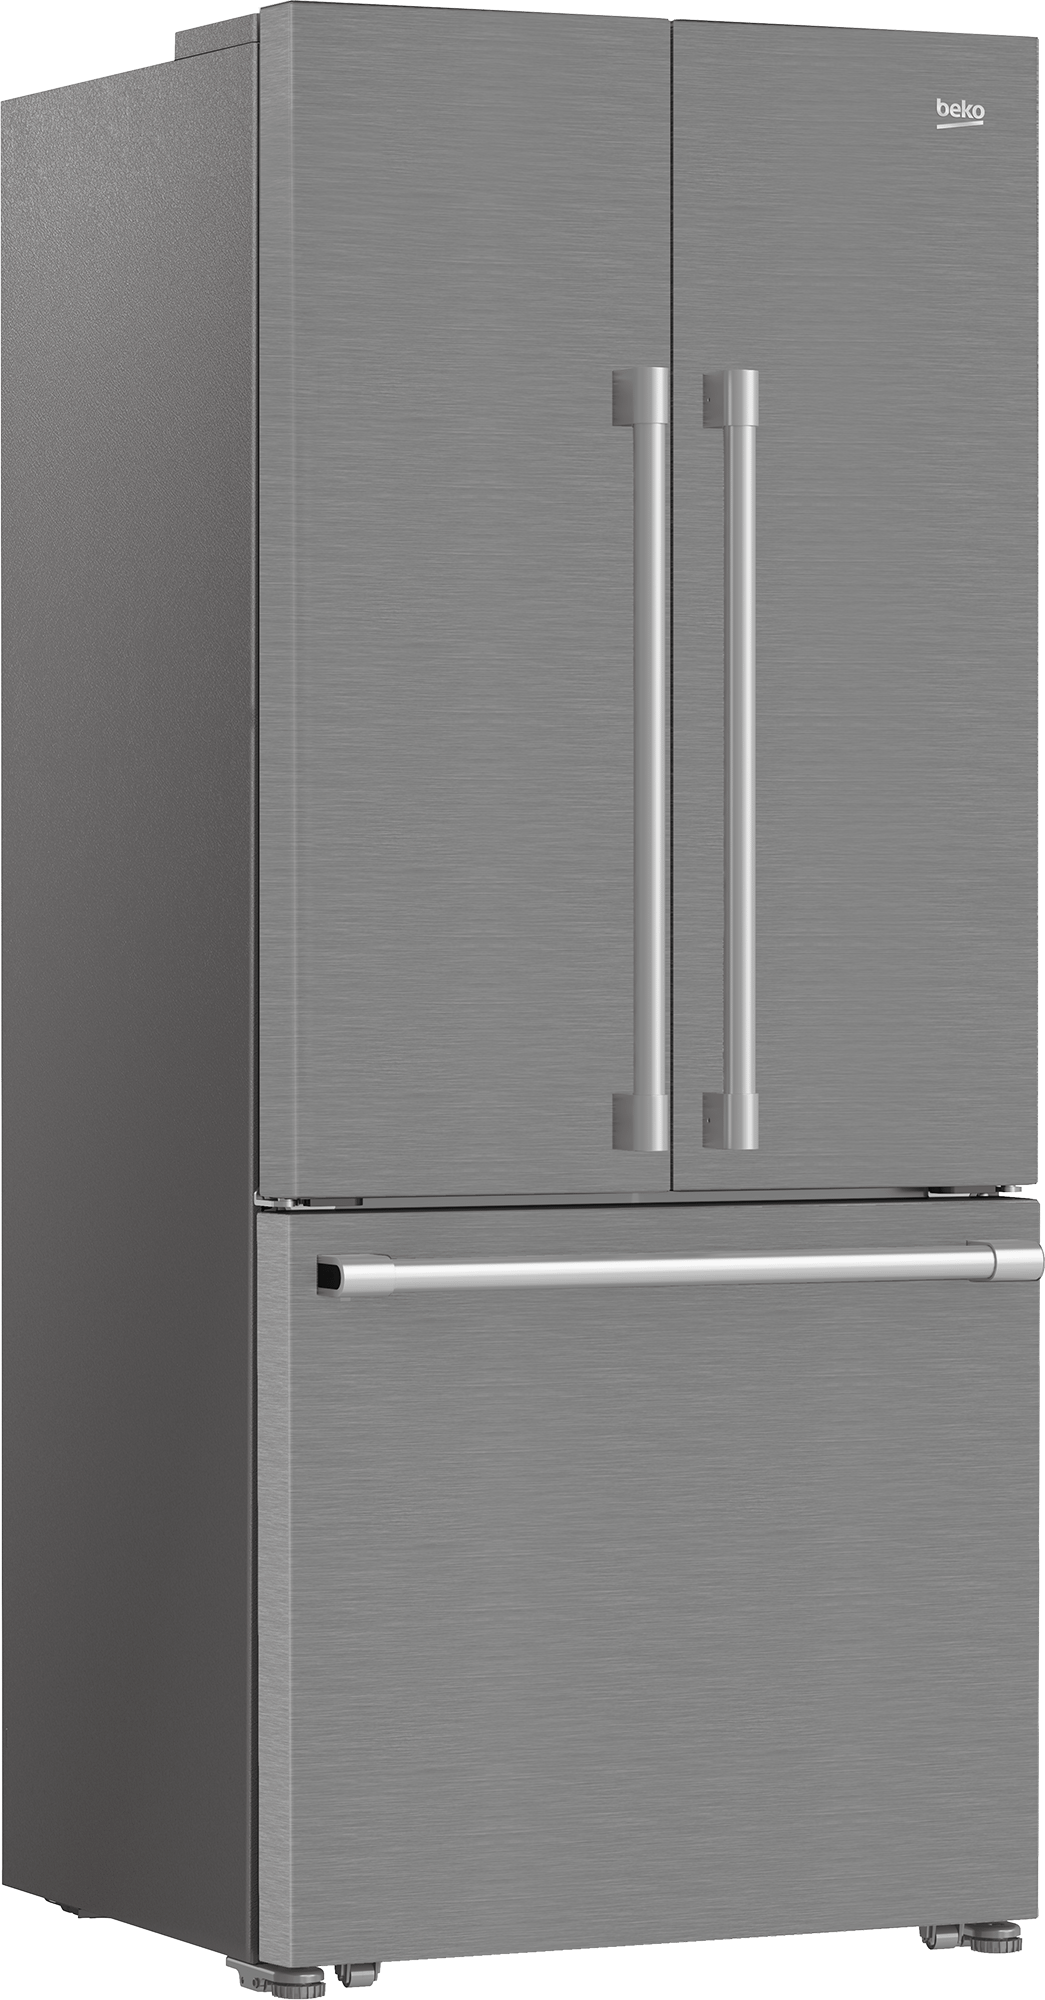 Beko BFFD30216SSIM 30" French Door Refrigerator